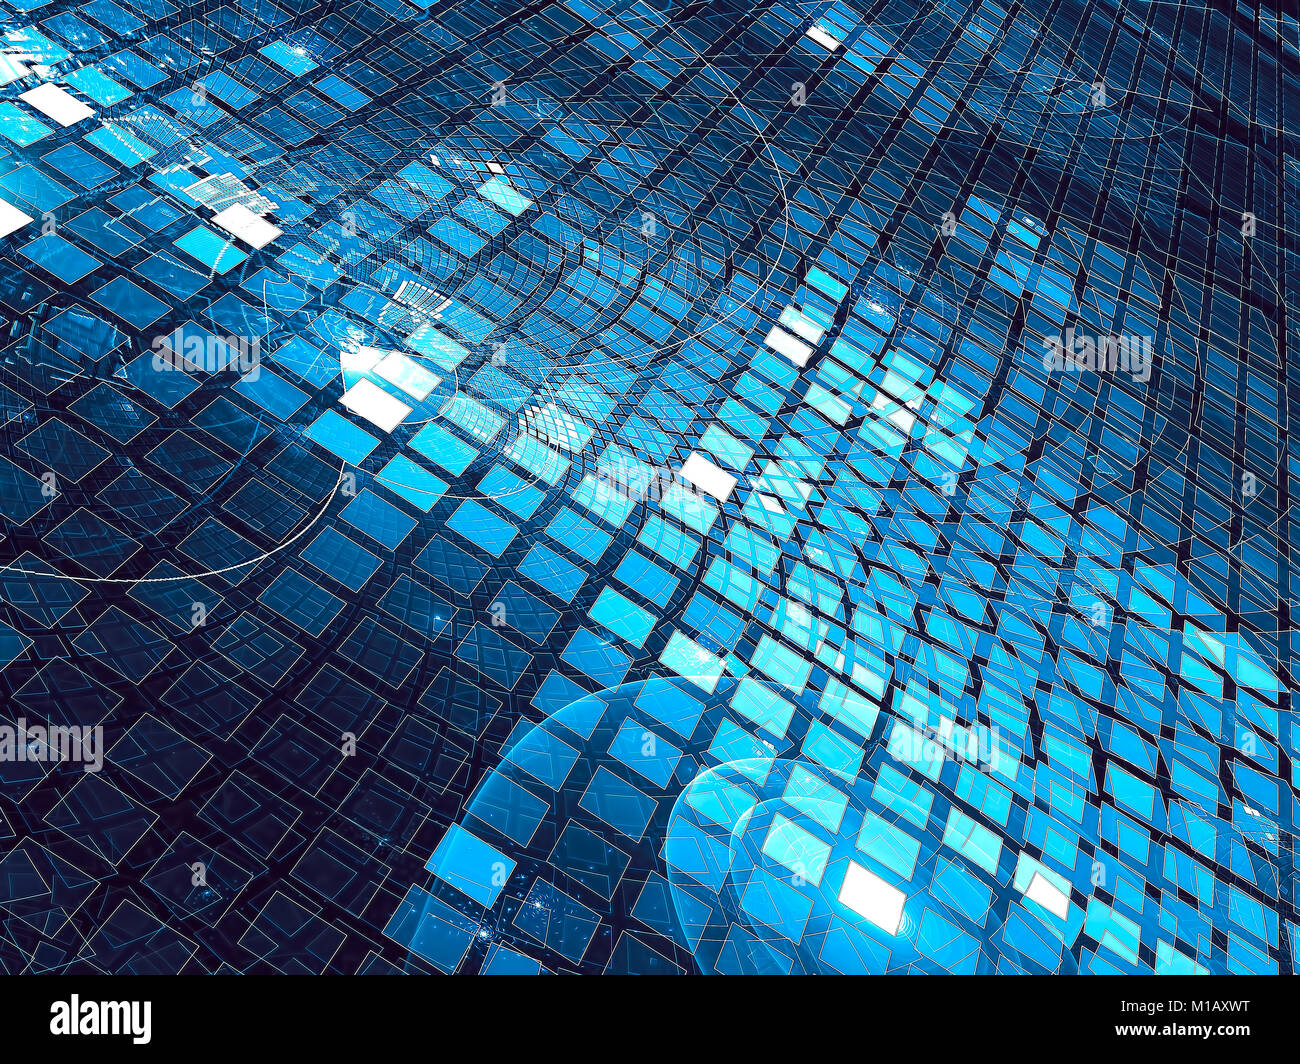 Leuchtende Zellen - Abstrakt digital erzeugten Bild Stockfoto